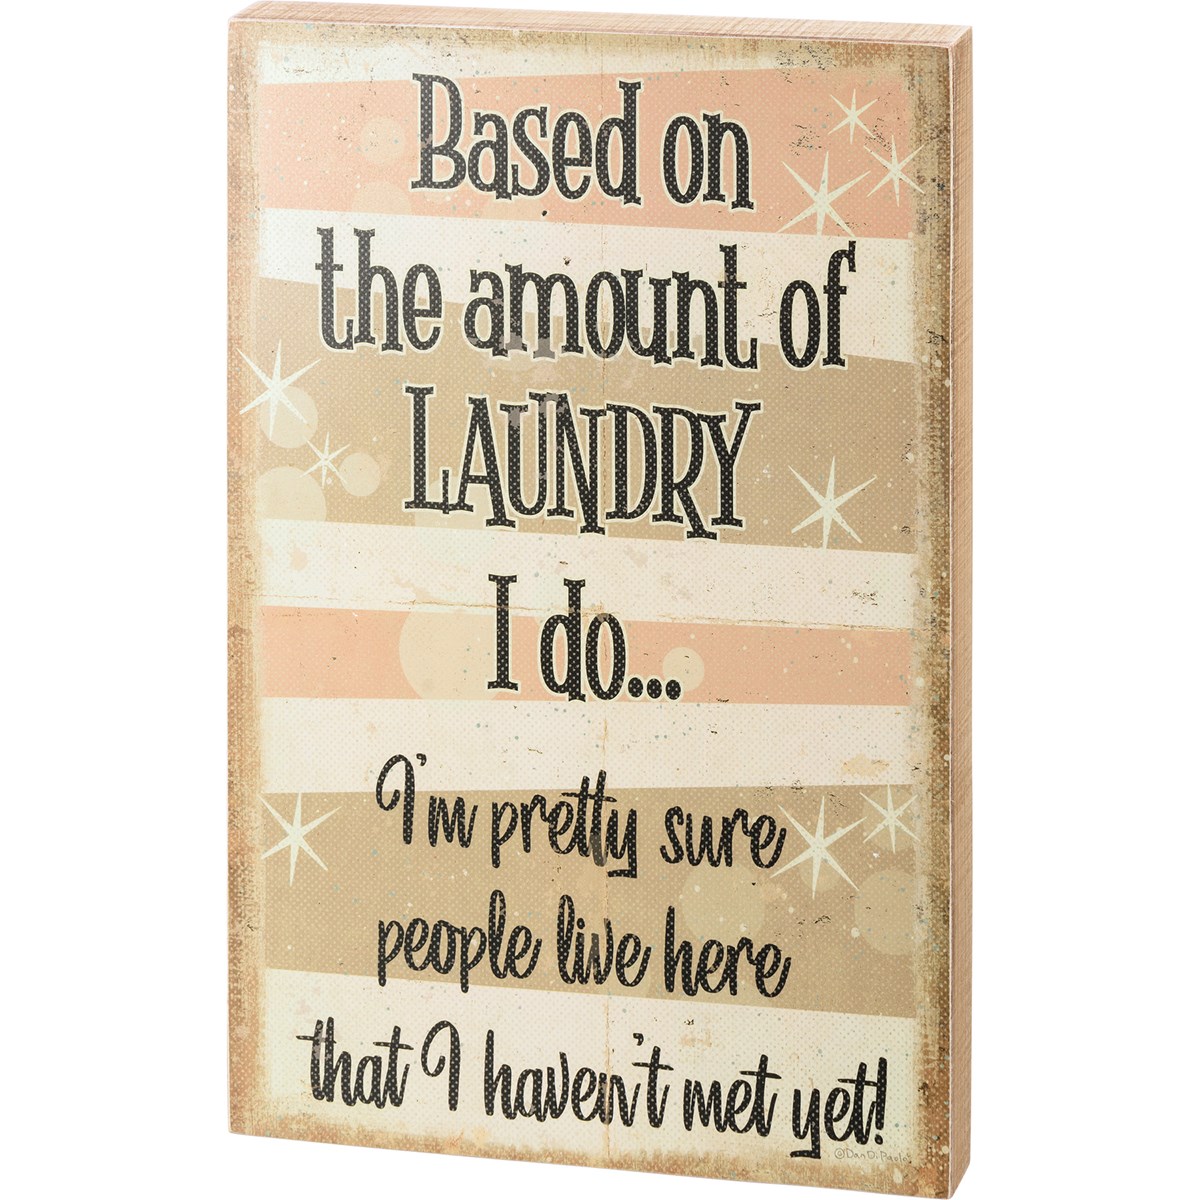 Based On The Amount Of Laundry I Do Box Sign - Wood, Paper